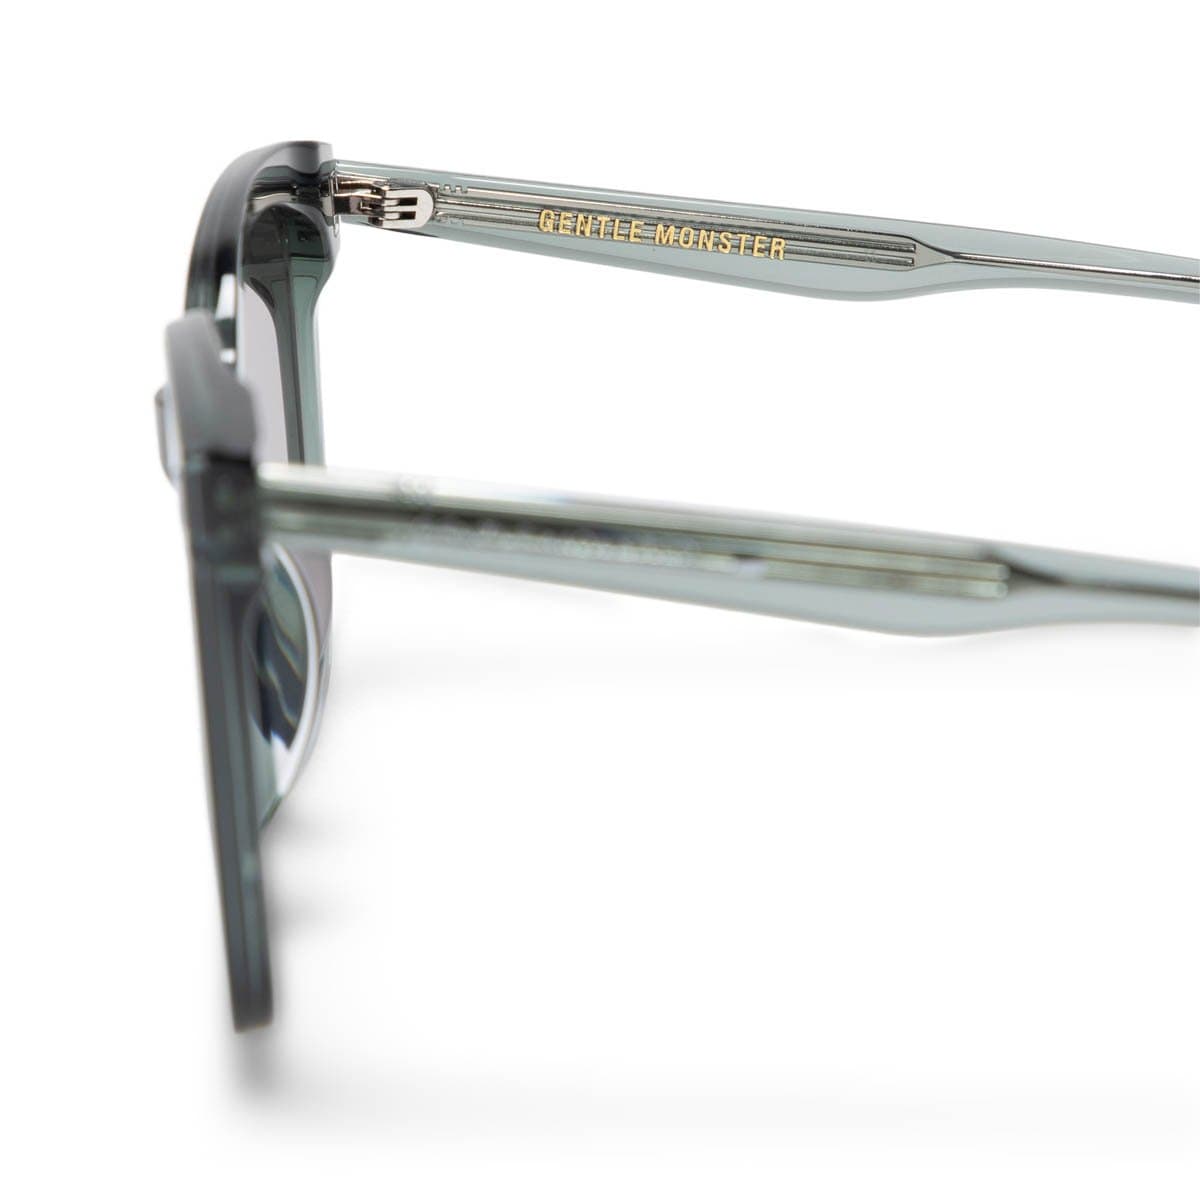 Gentle Monster Accessories - Sunglasses BLACK / O/S FRIDA G3